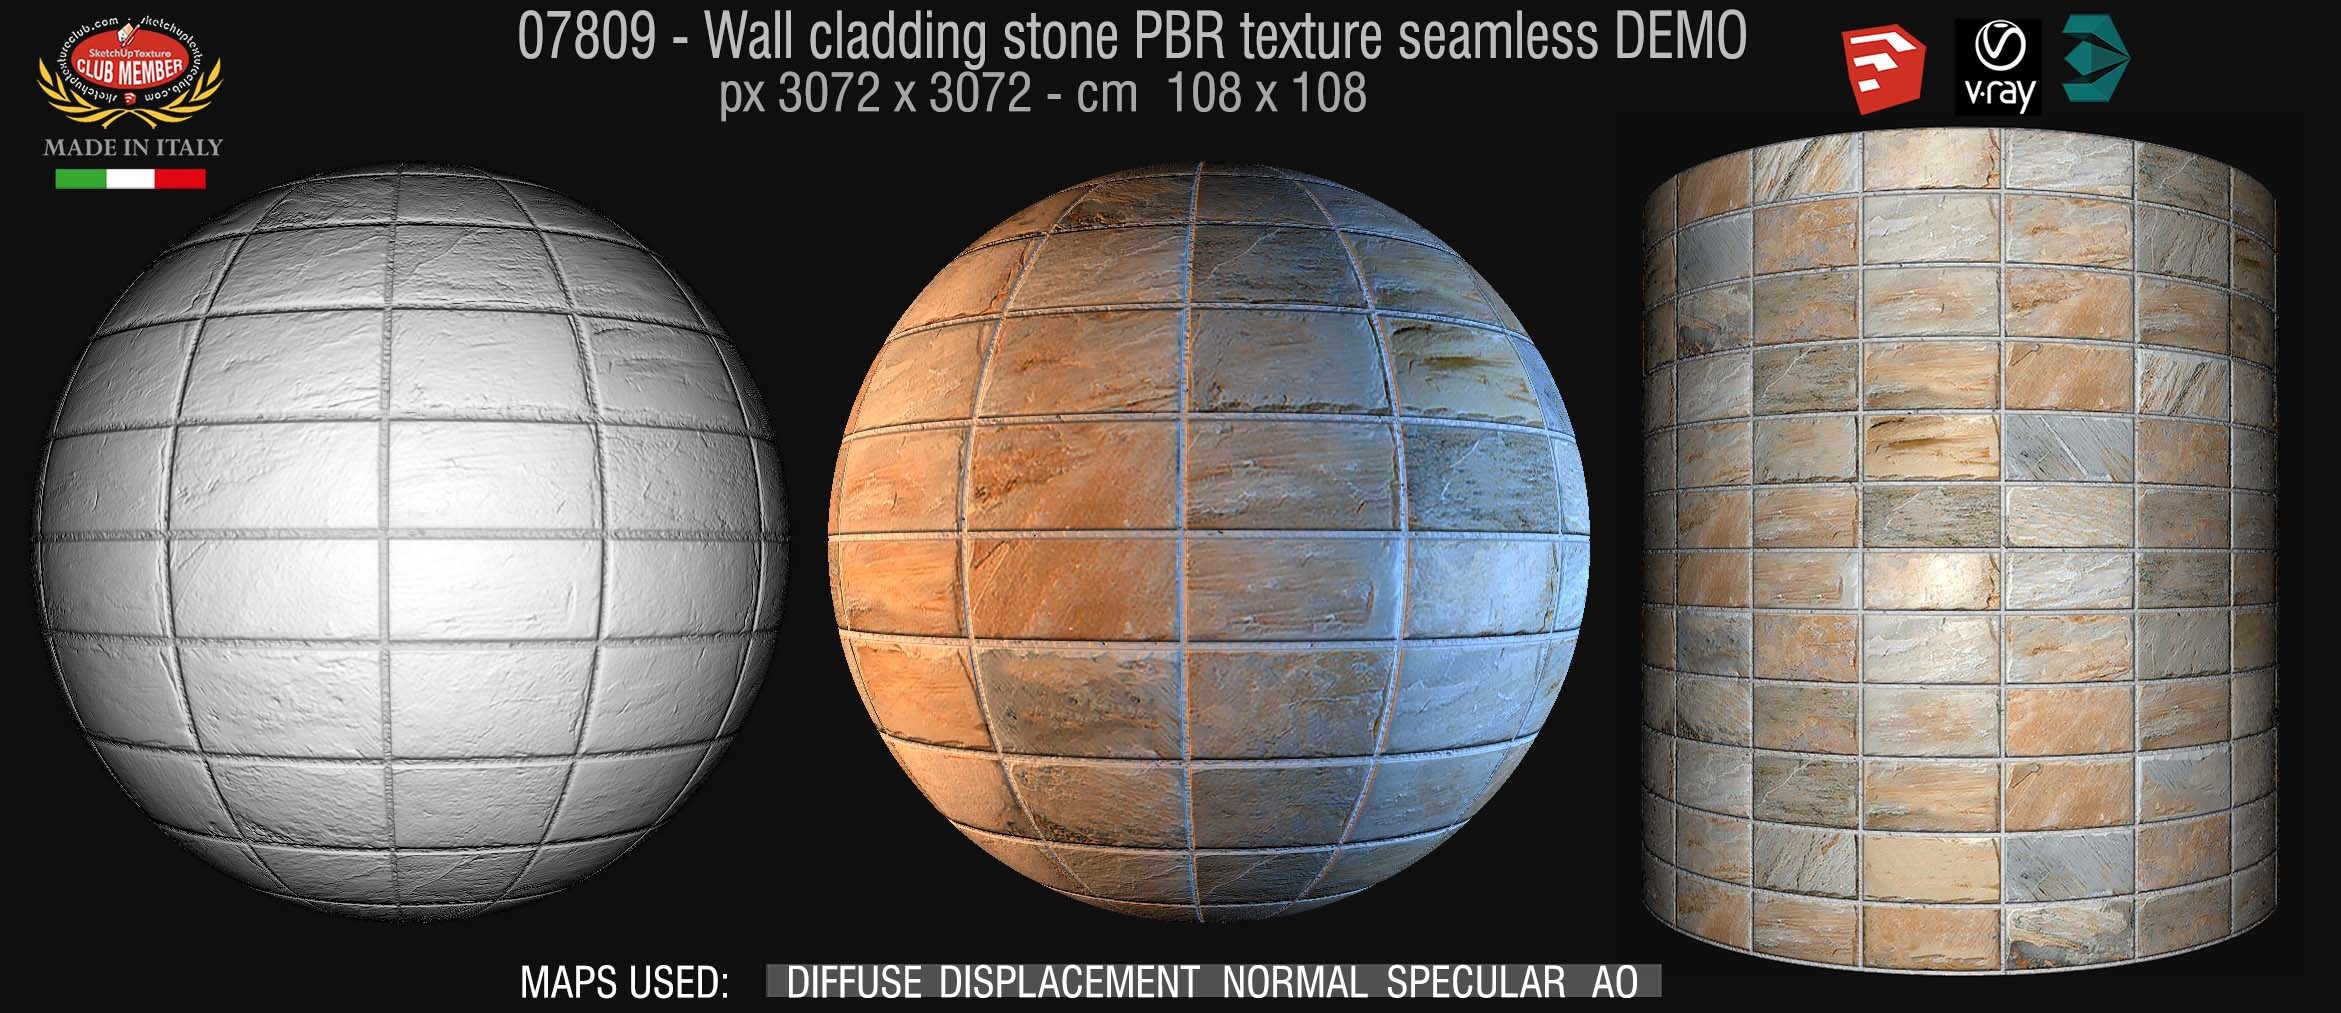 07809  Wall cladding stone texture seamless DEMO